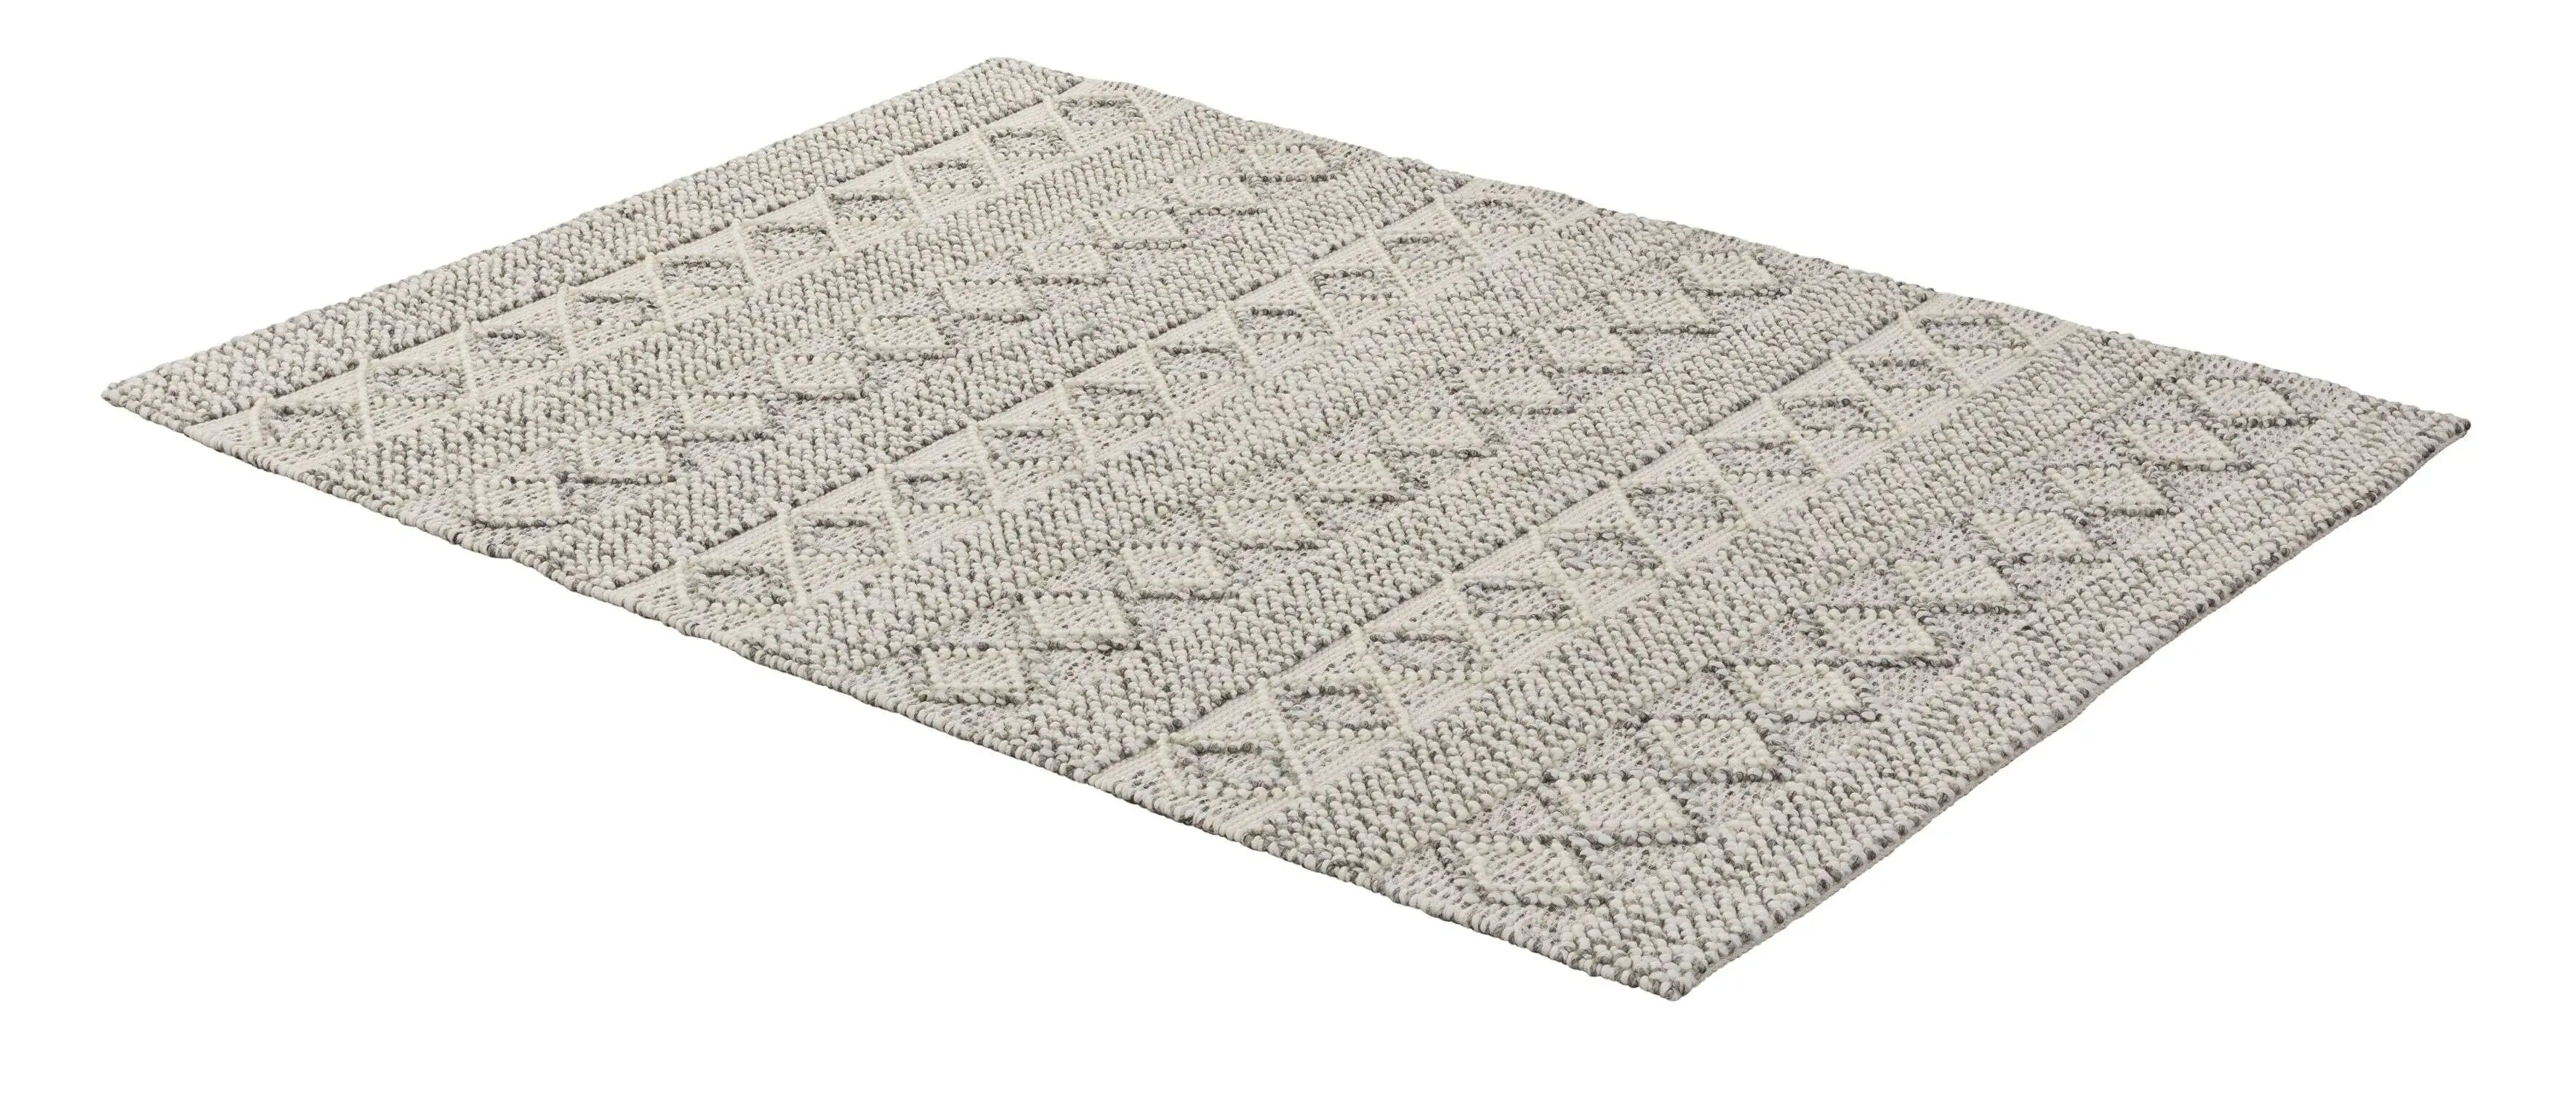  Teppich Alva 6011-191-006 im Wunschmaß